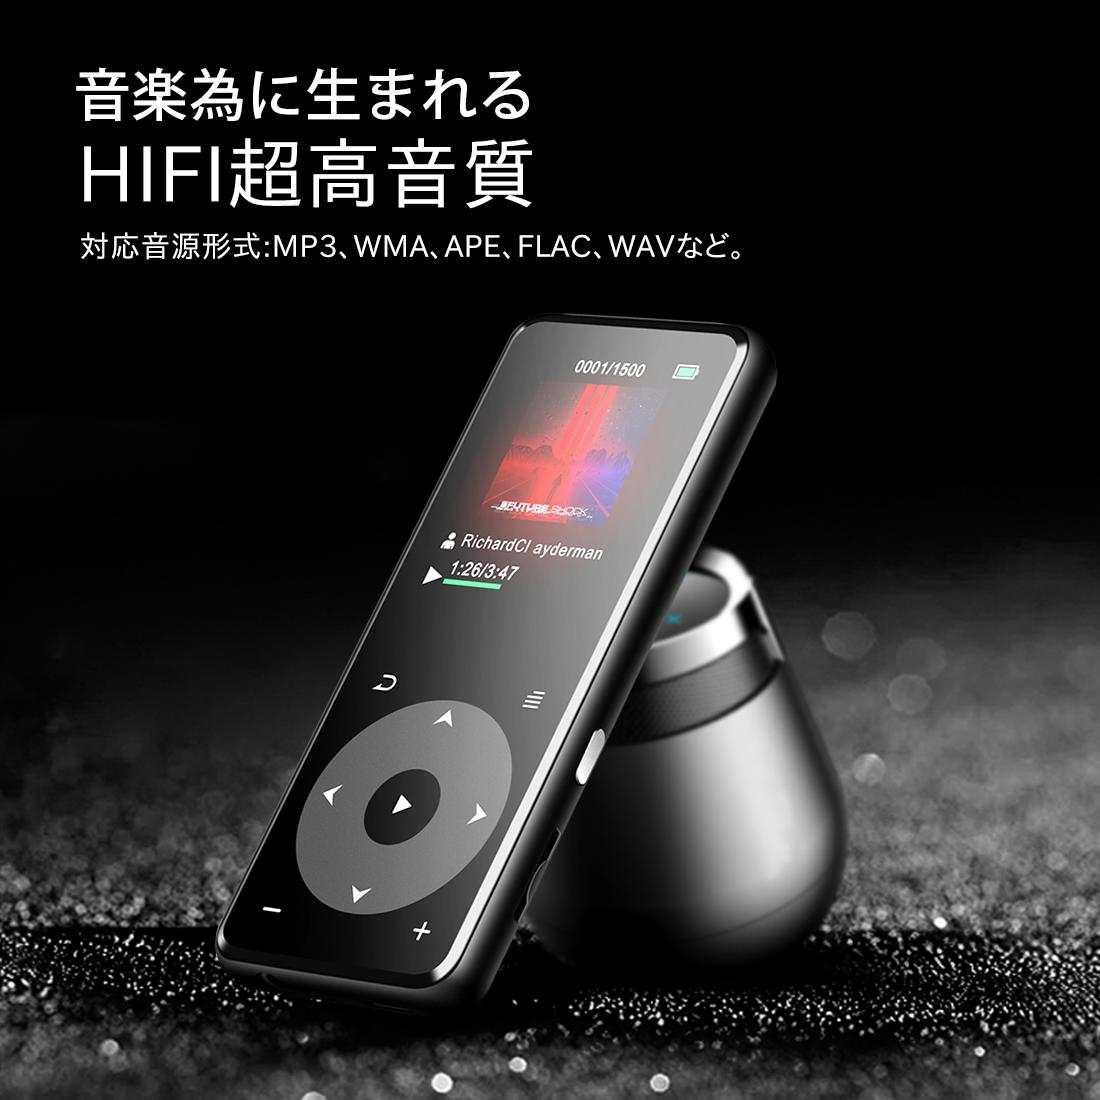 AGPTEK MP3プレーヤー bluetooth搭載 Hi-Fiロスレス音質 デジタルオーディオプレーヤー bluetooth対応 光るタッチボタン 1.8インチカラー画面 高音質 動画 歩数計 合金製 内蔵8GB 最大128GB microsdカード対応 A16TB ブラック